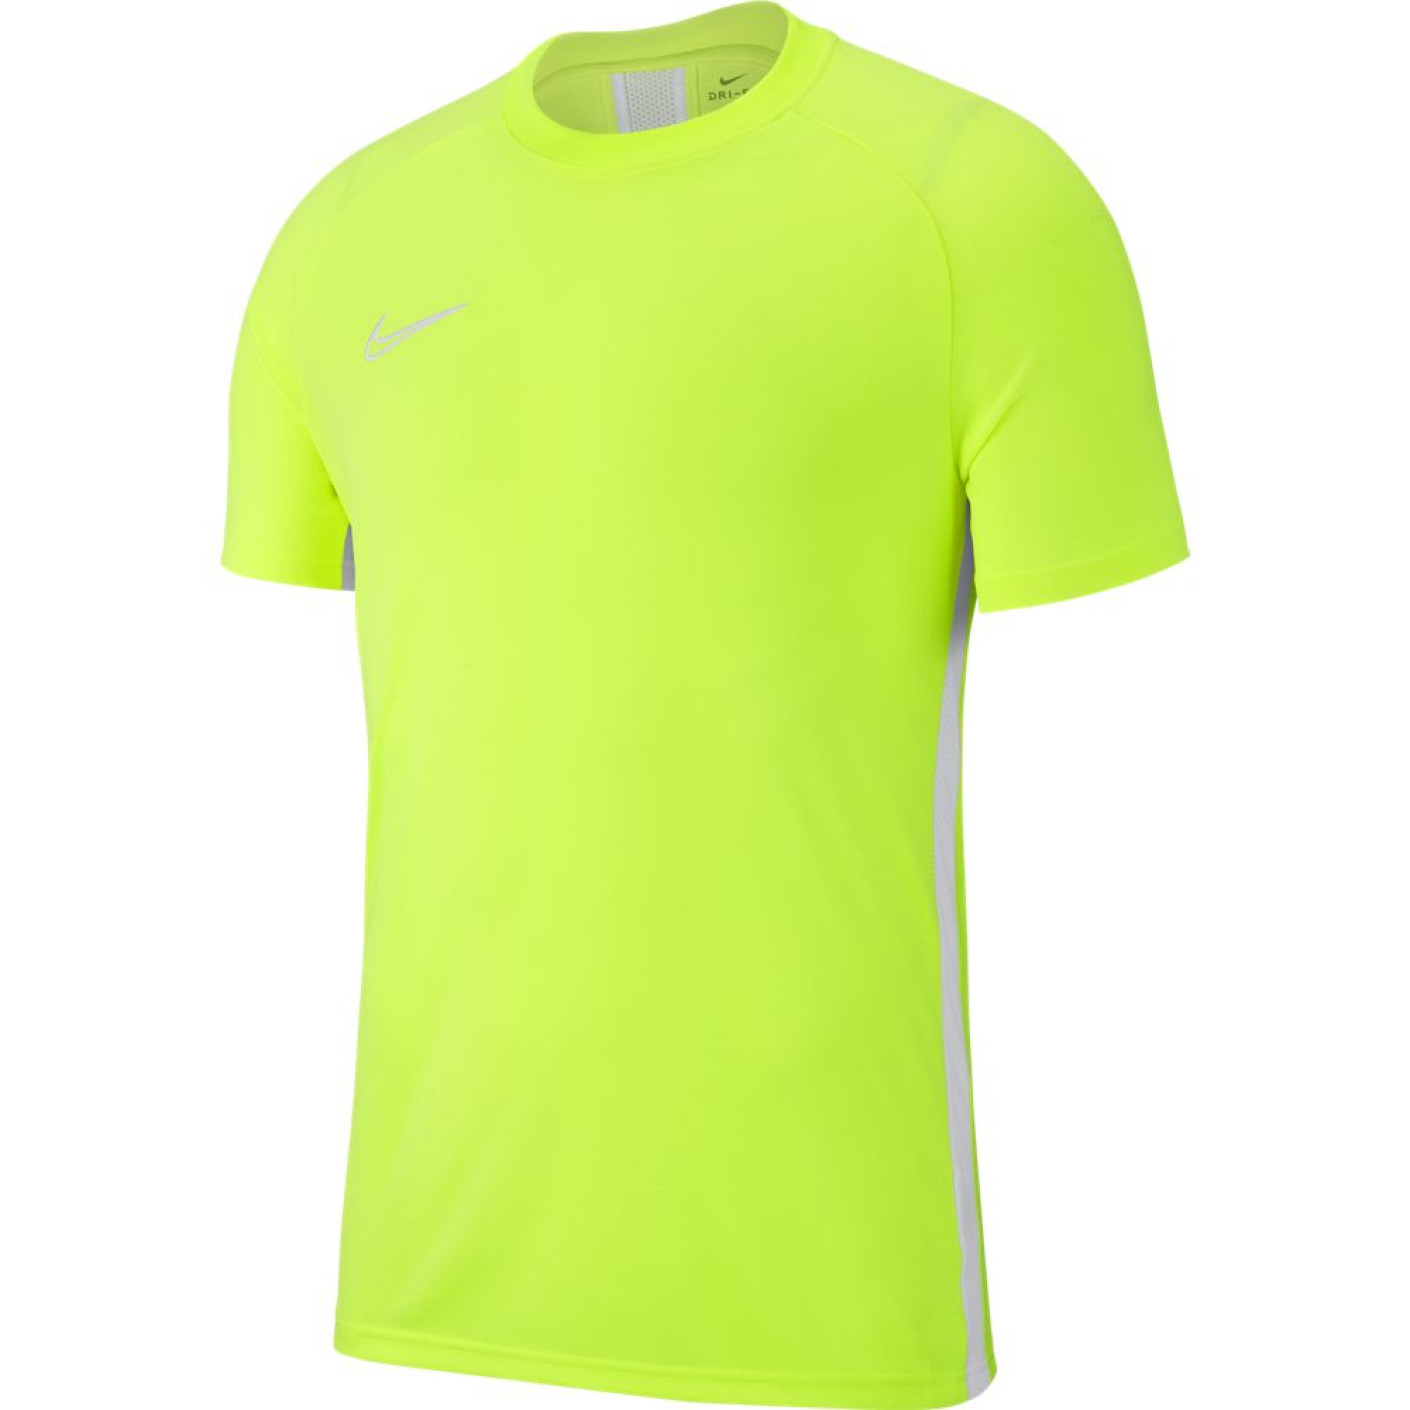 Nike Dry Academy 19 Trainingsshirt Volt